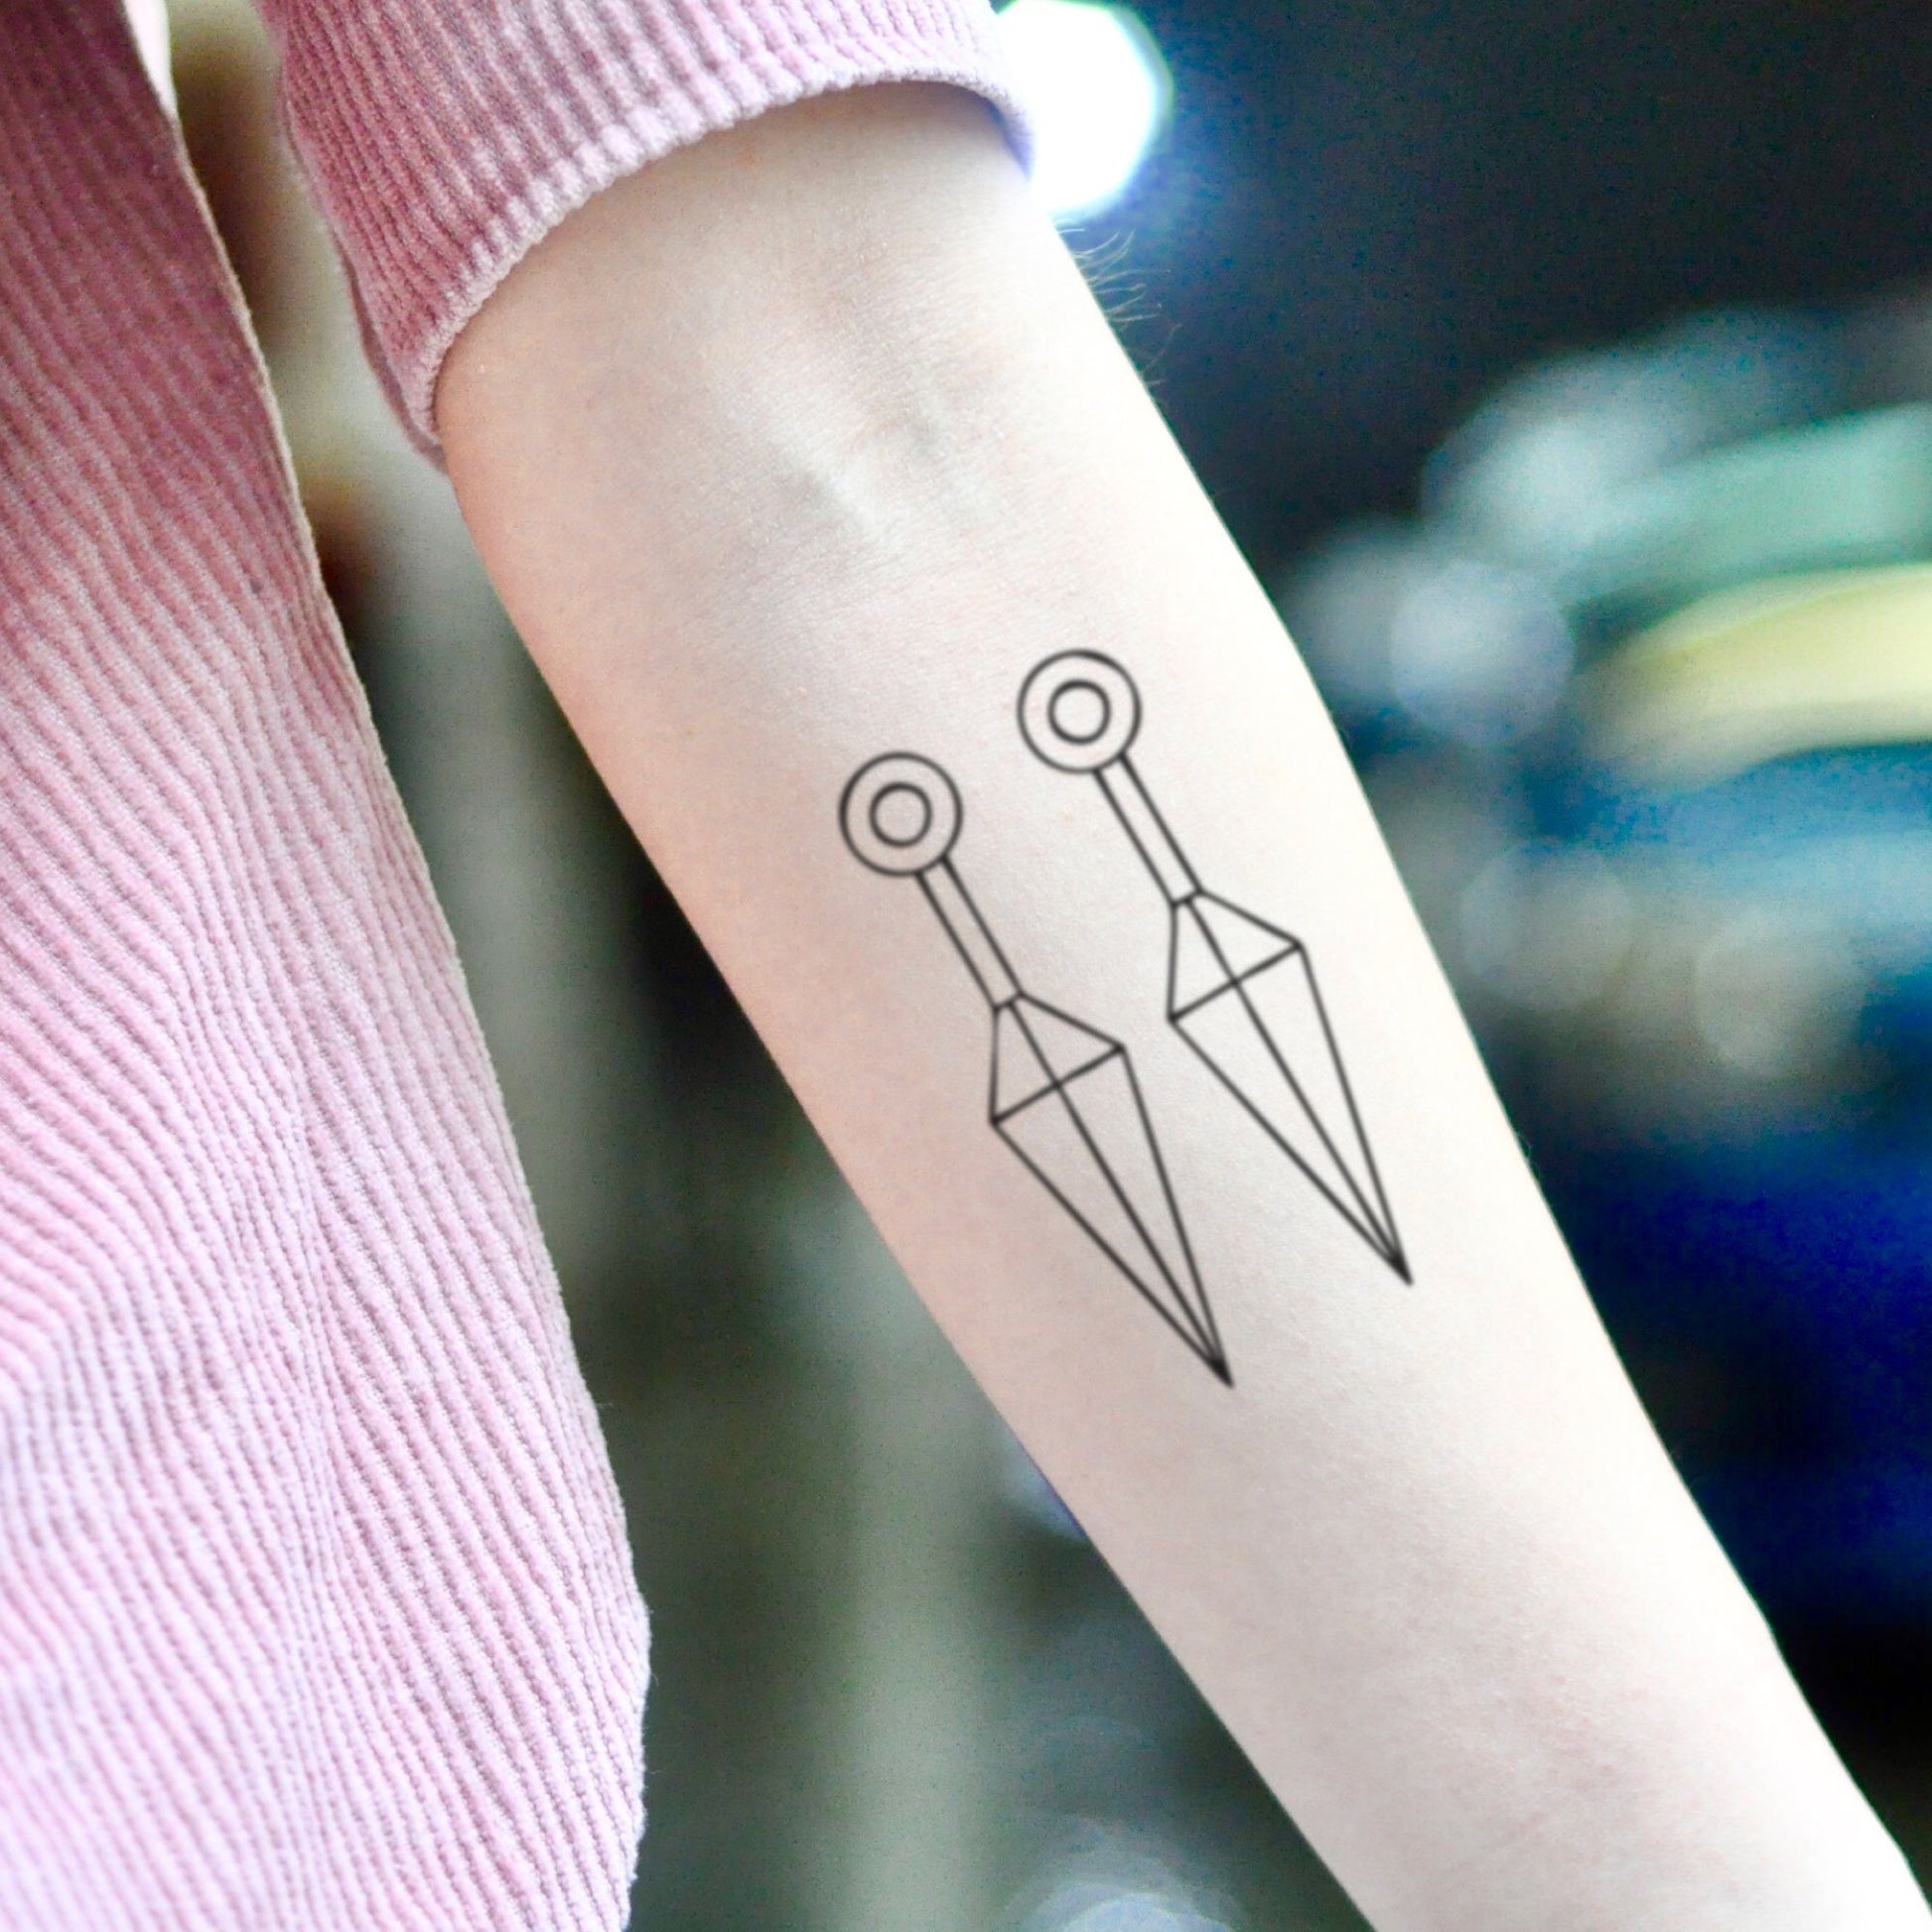 fake small kunai knives minimalist temporary tattoo sticker design idea on inner arm